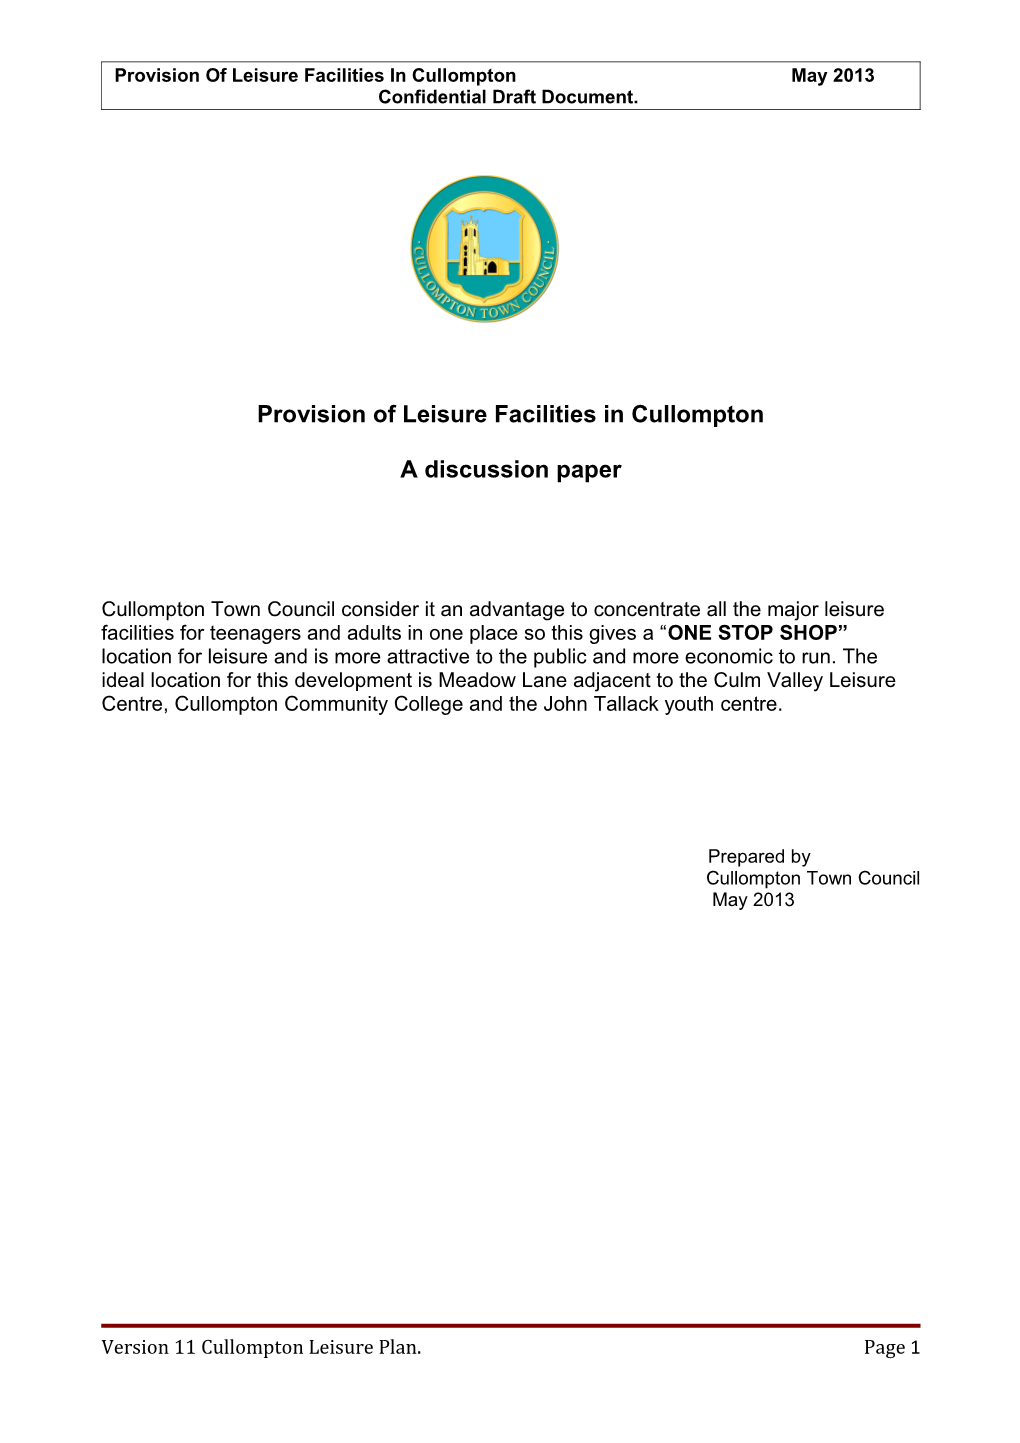 Provision of Leisure Facilities in Cullompton